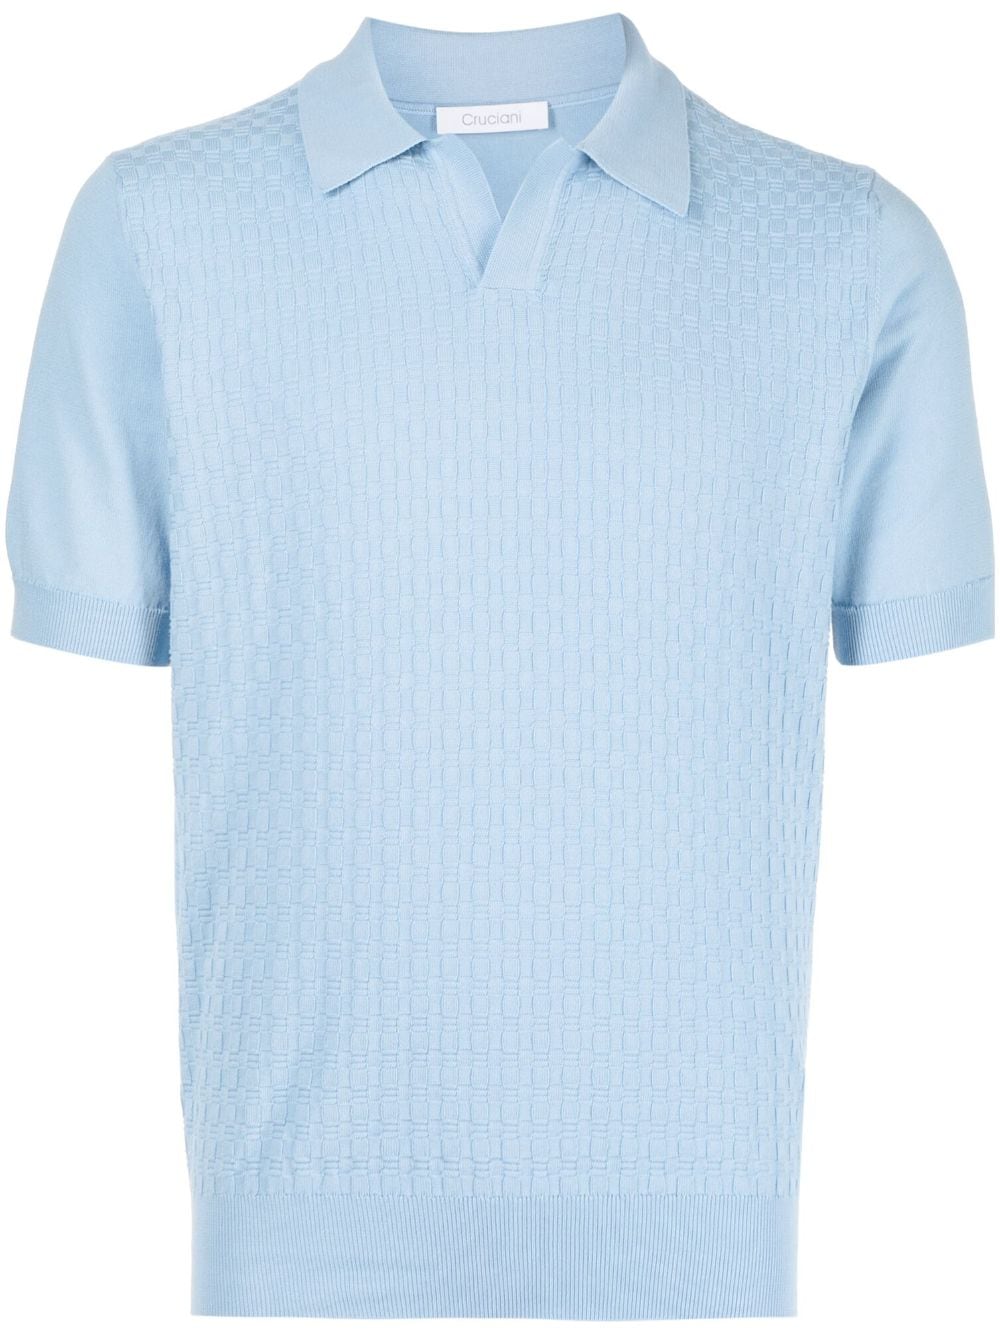 Cruciani short-sleeve knitted polo shirt - Blue von Cruciani